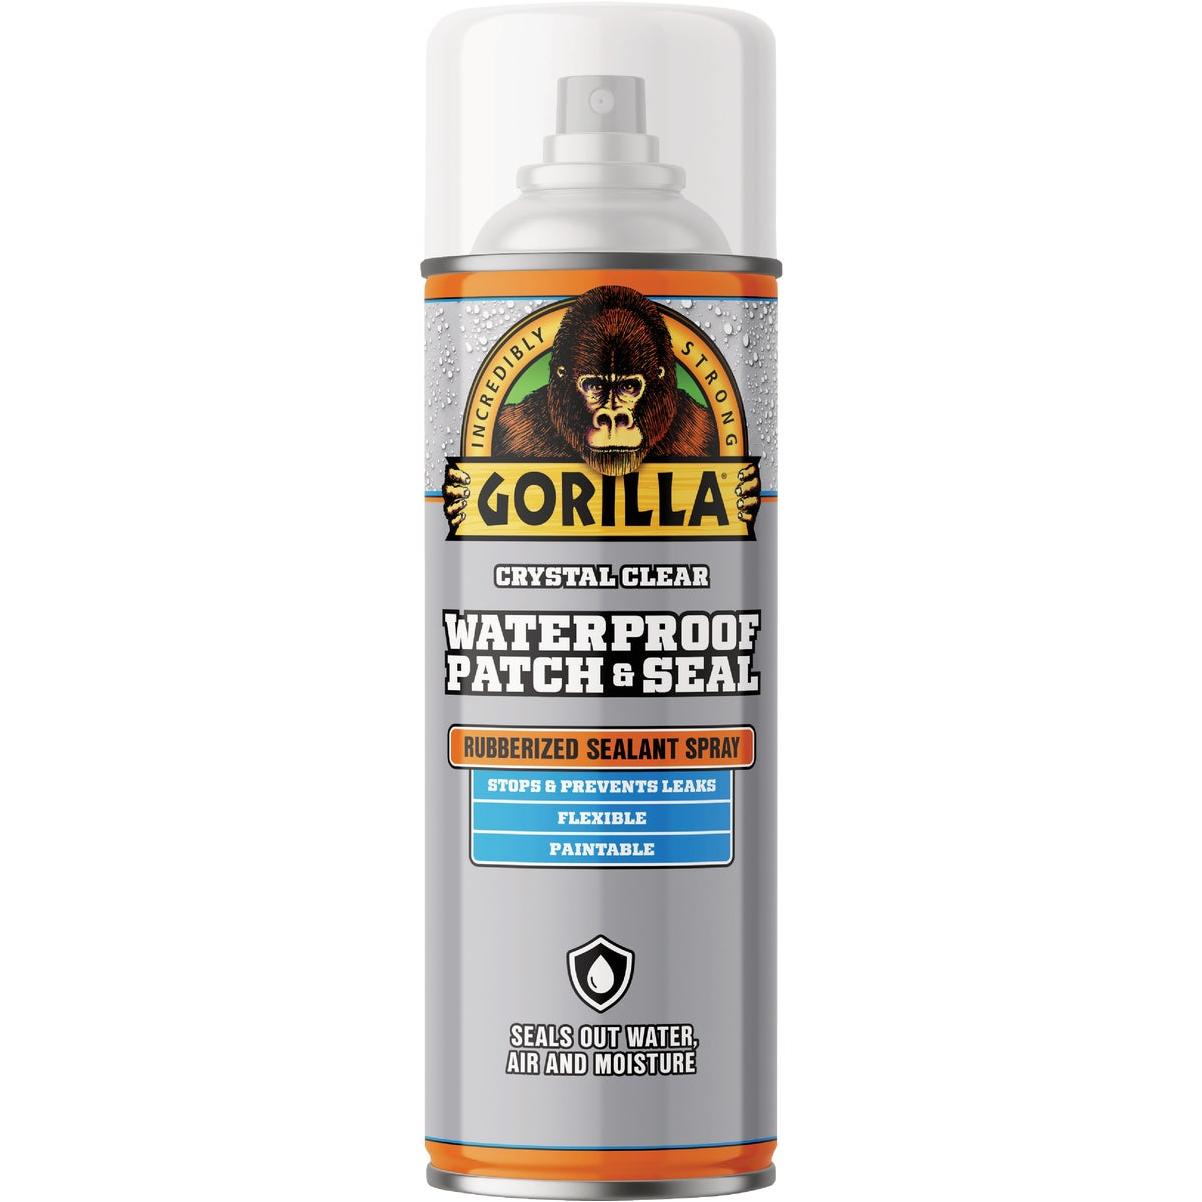 Gorilla Waterproof Caulk and Seal 10-oz Clear Silicone Caulk in